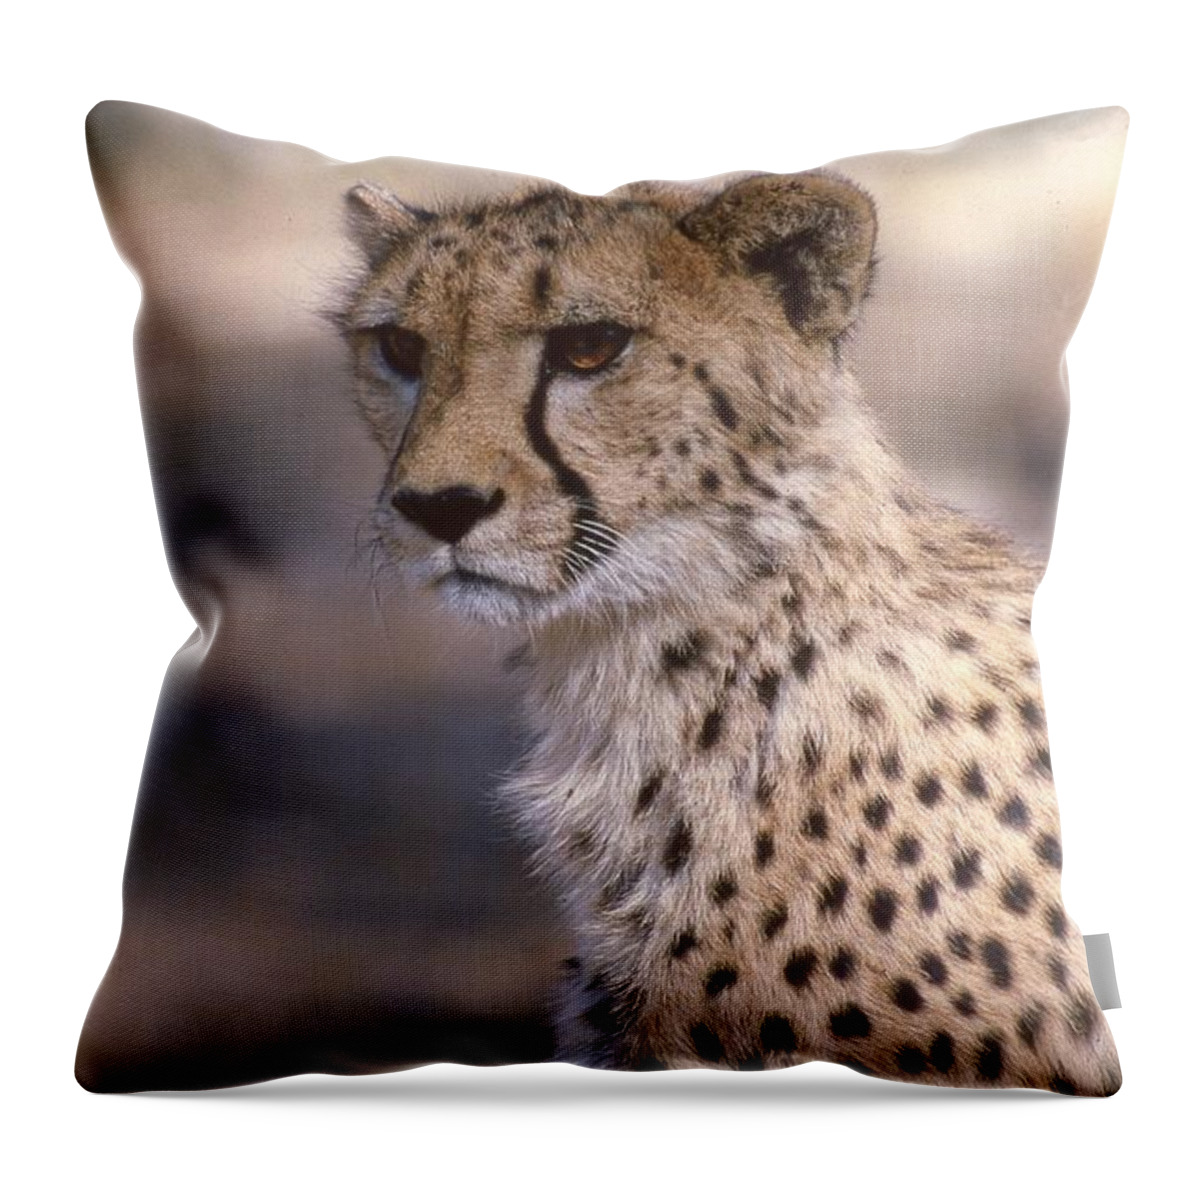 Cheetah Throw Pillow featuring the photograph Cheetah Staring by Russel Considine